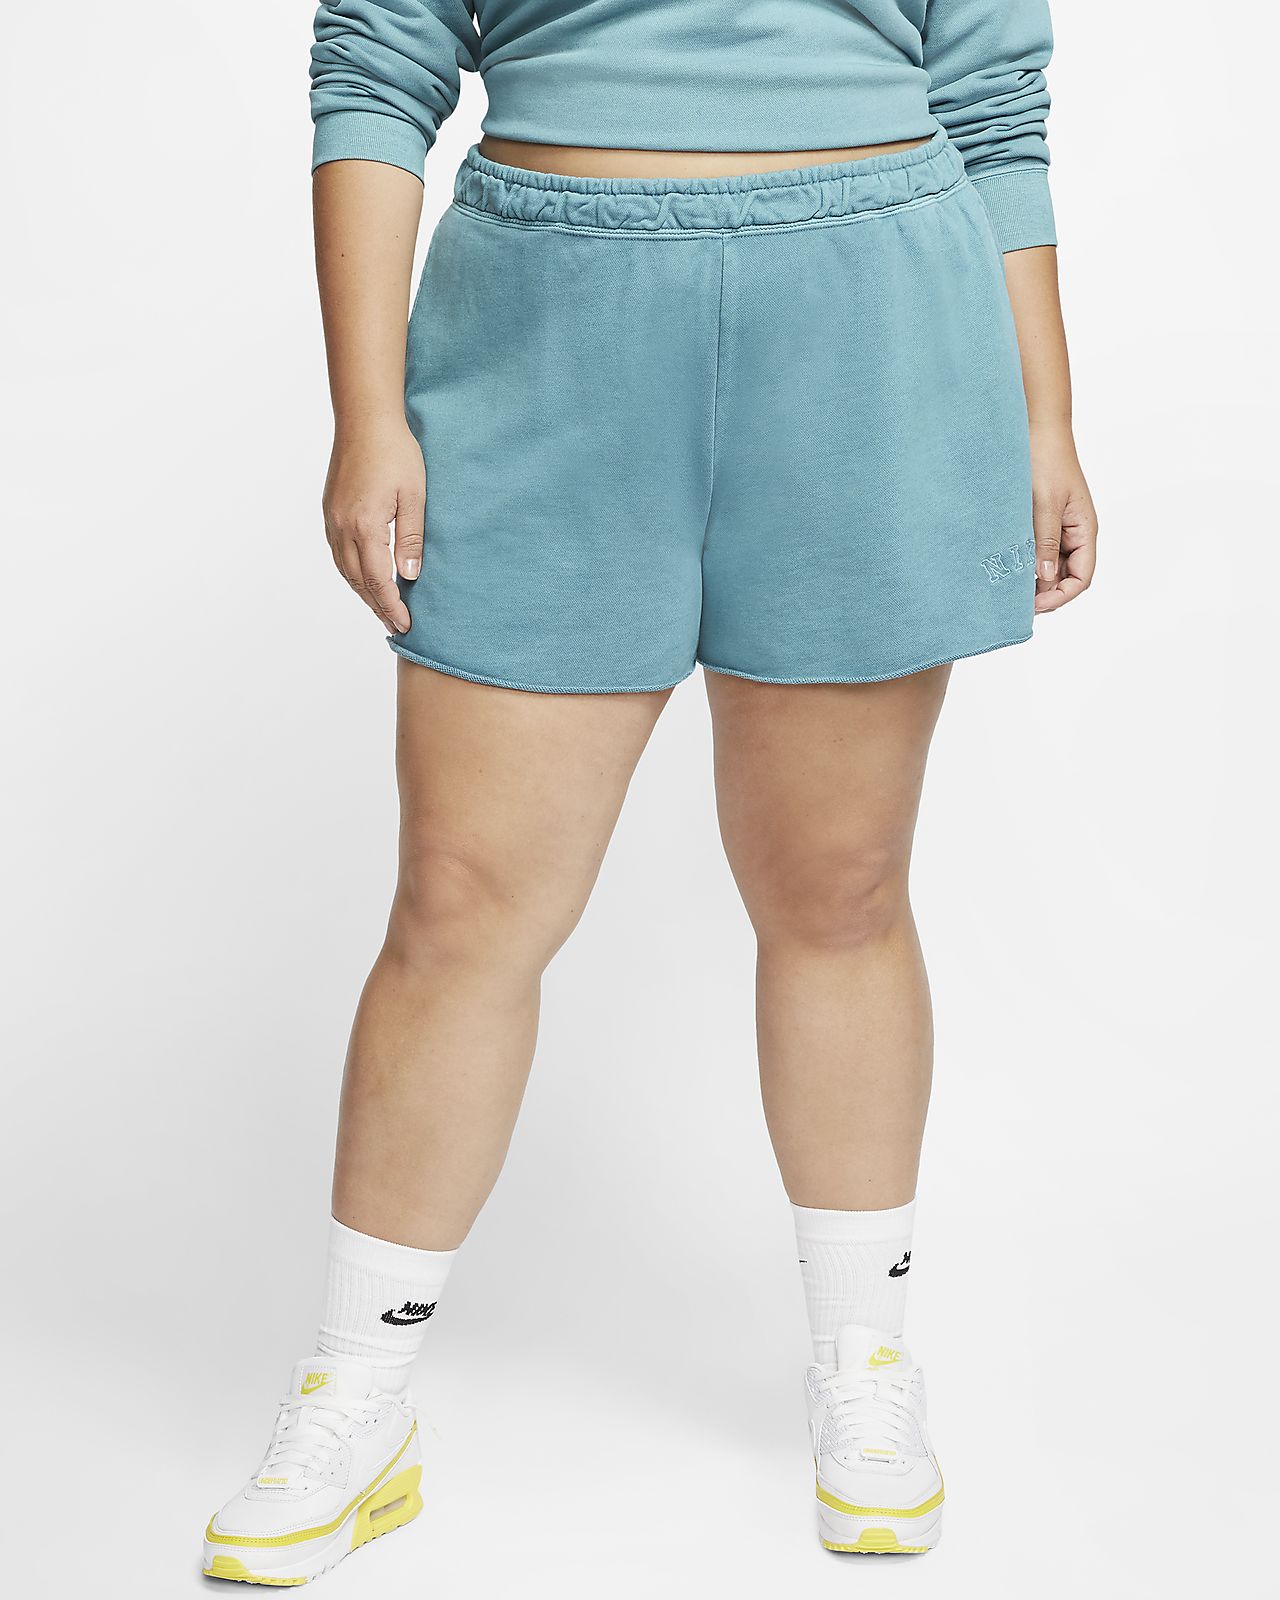 nike terry cloth shorts cheap online